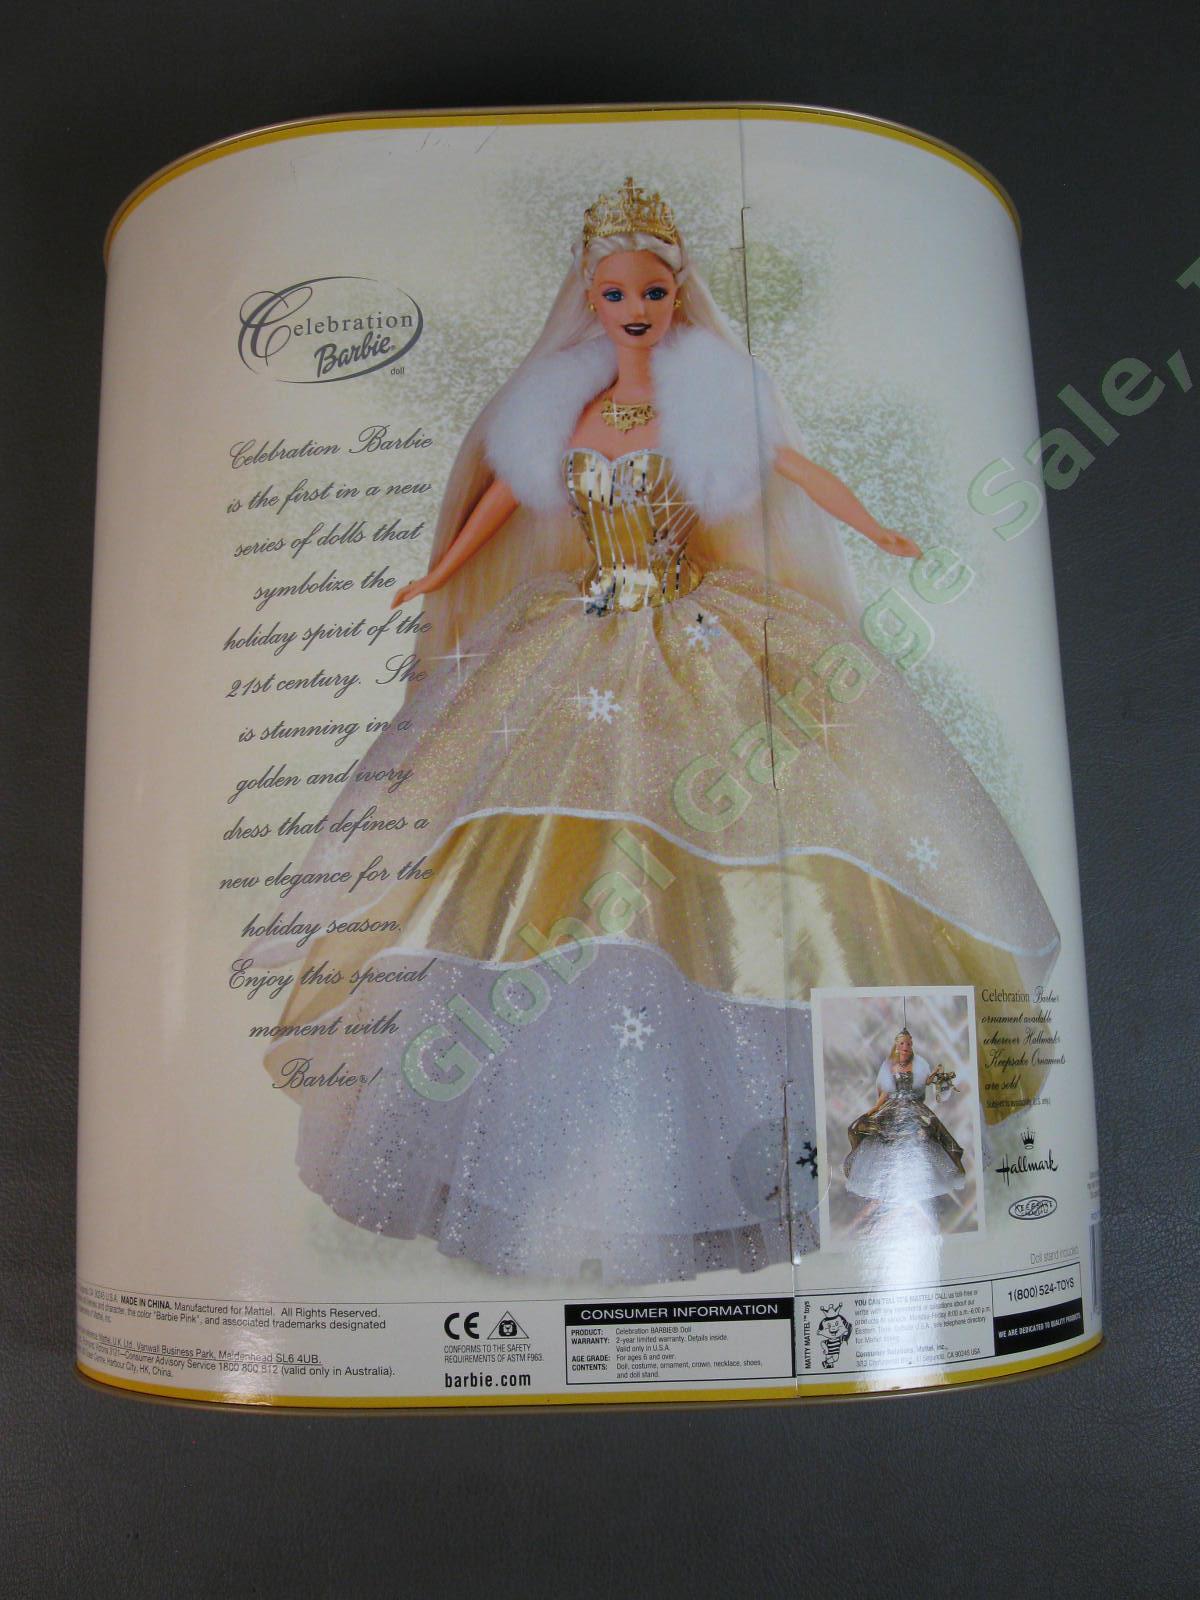 1999 2000 Millennium Princess 23995 Celebration Barbie Doll 28269 New Years SET 6